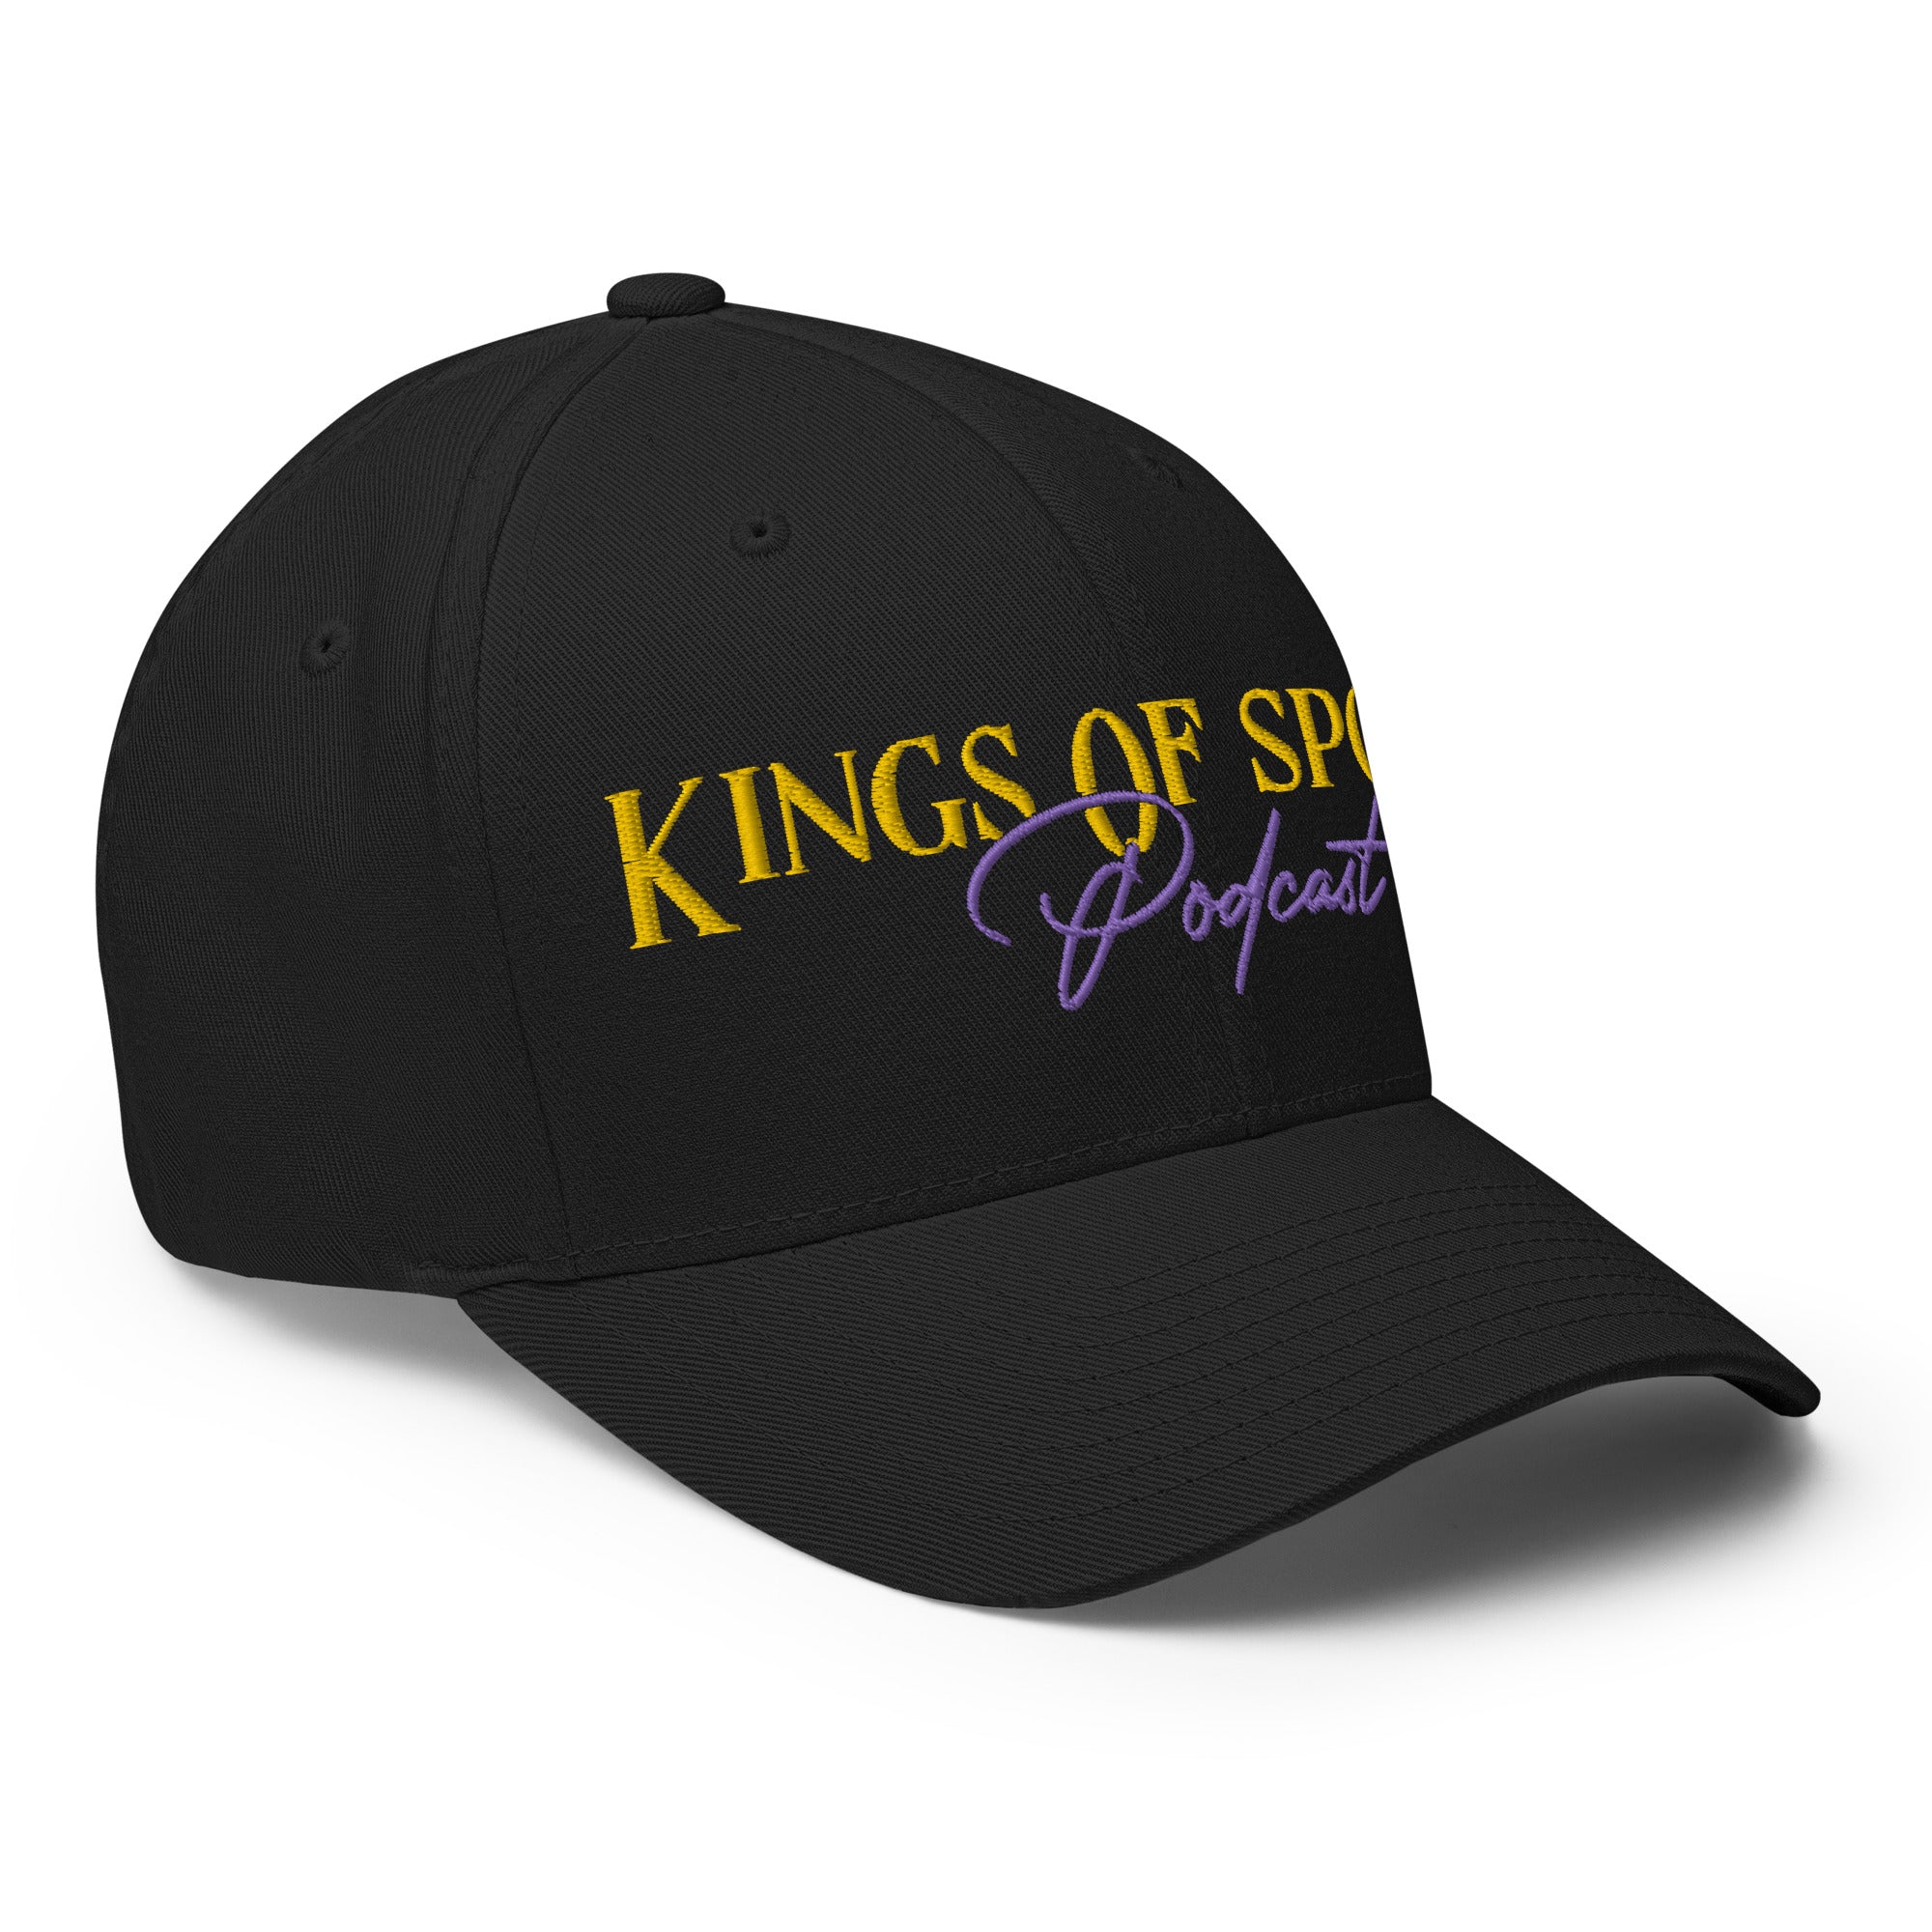 Kings of Sport Podcast Flexfit Cap